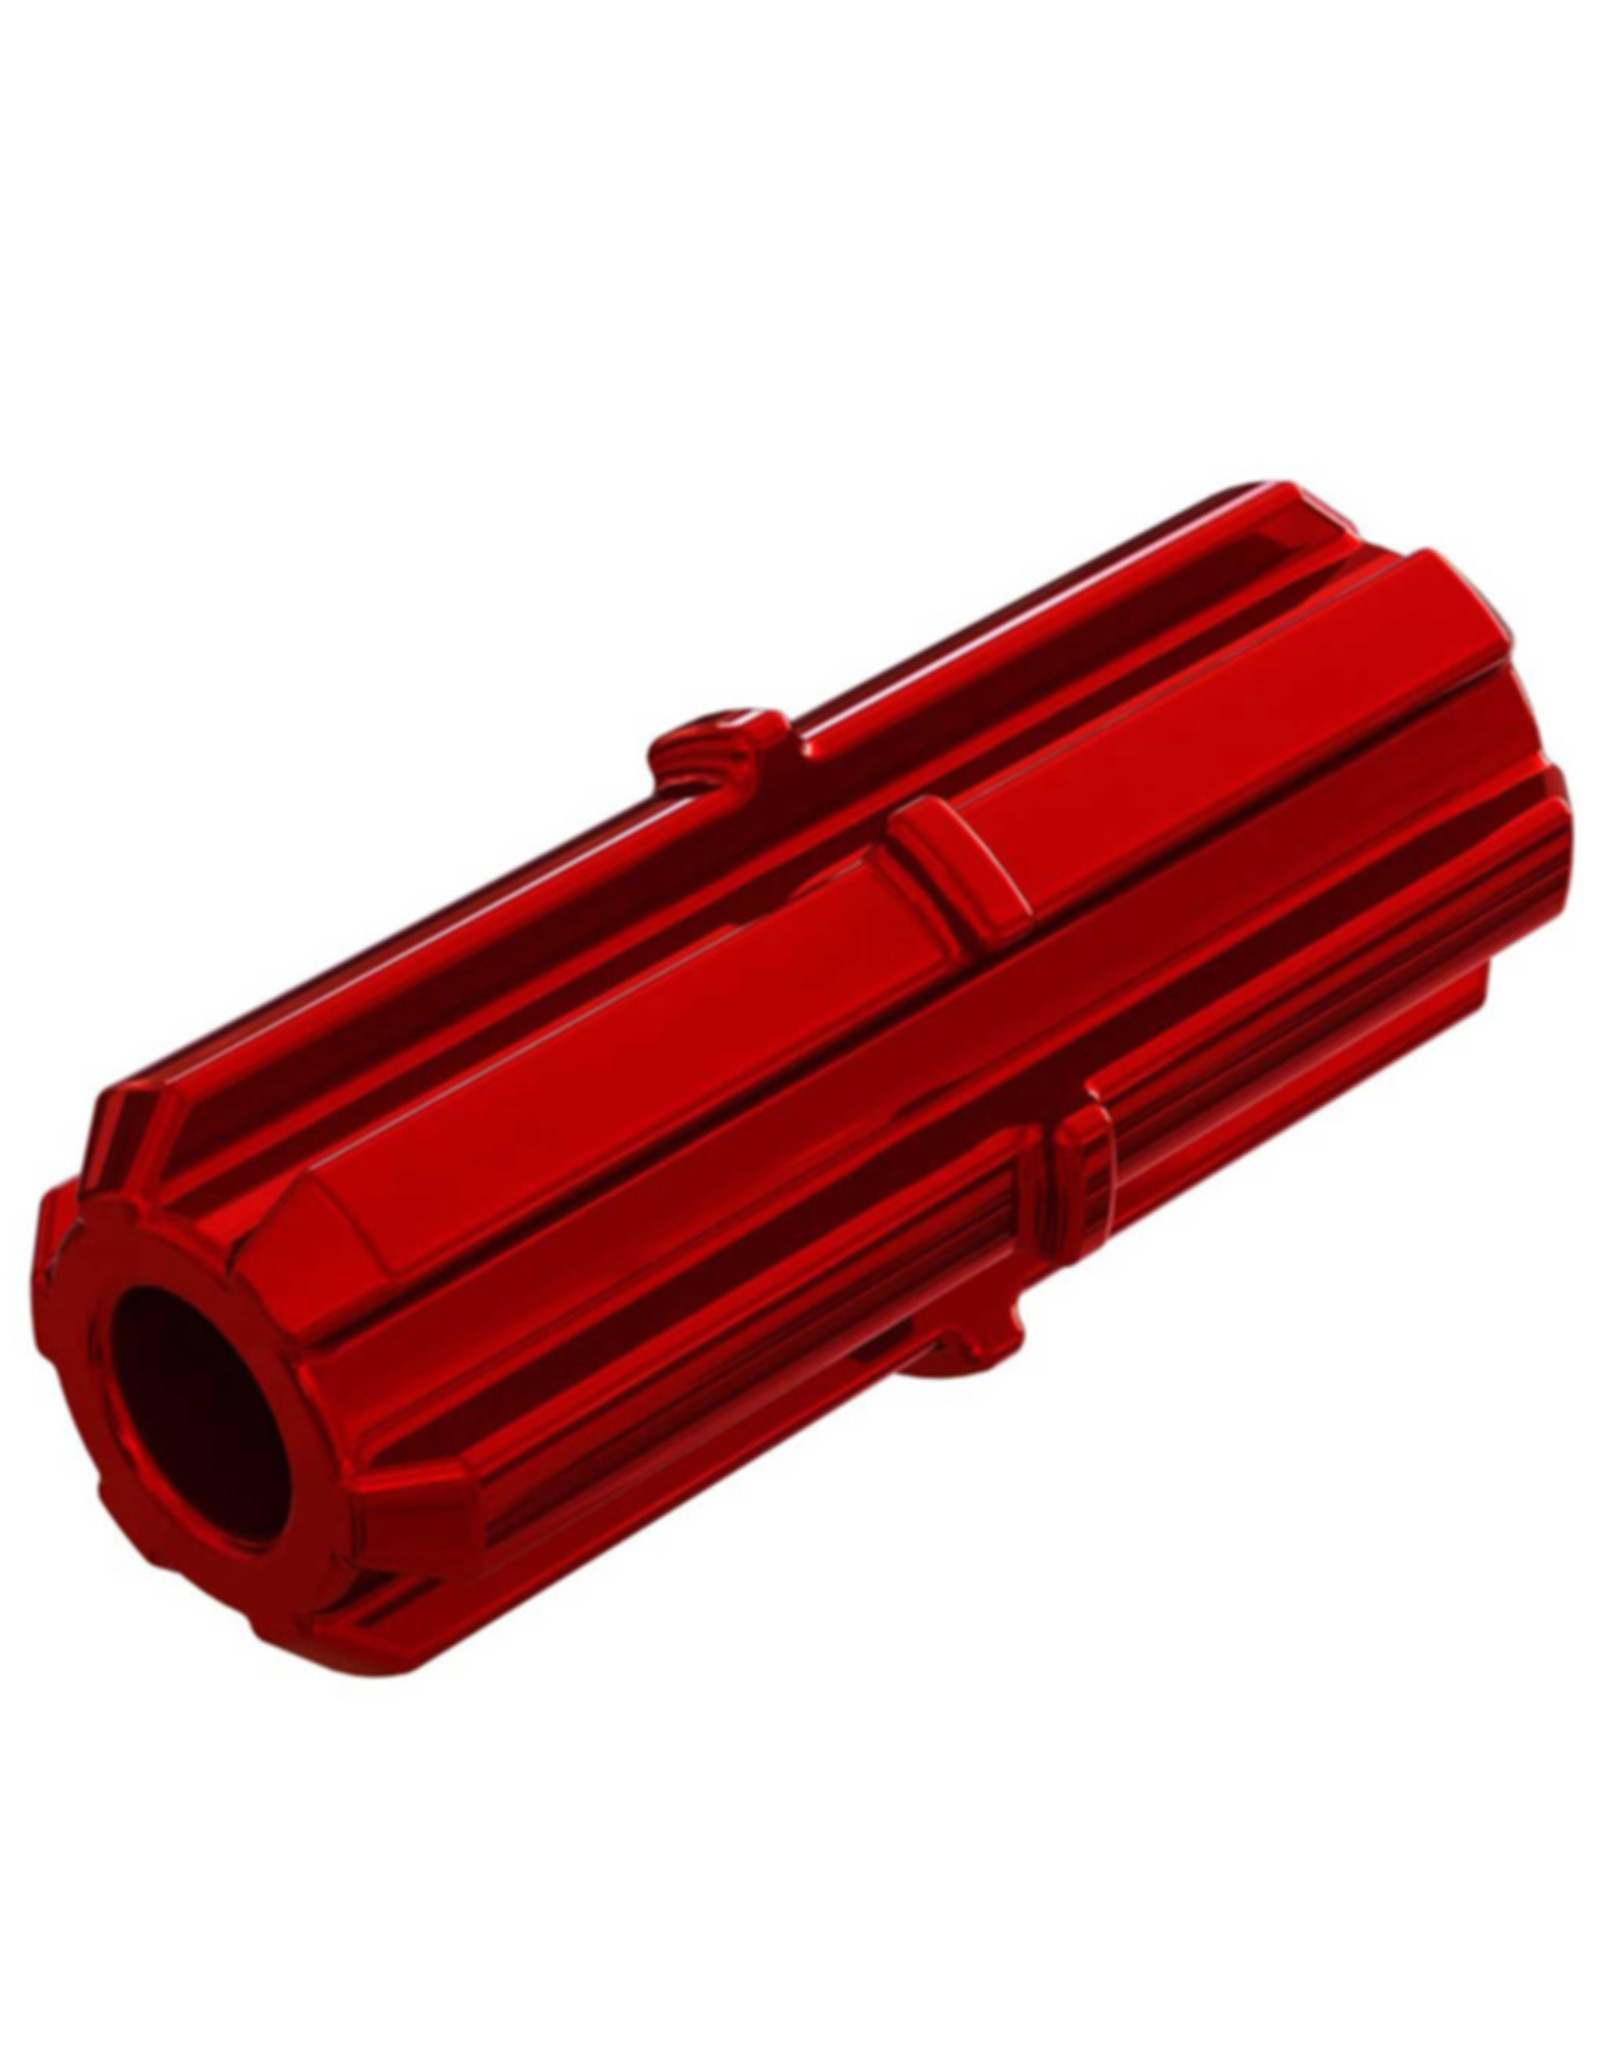 Arrma AR310881 Slipper Shaft Red BLX 3S